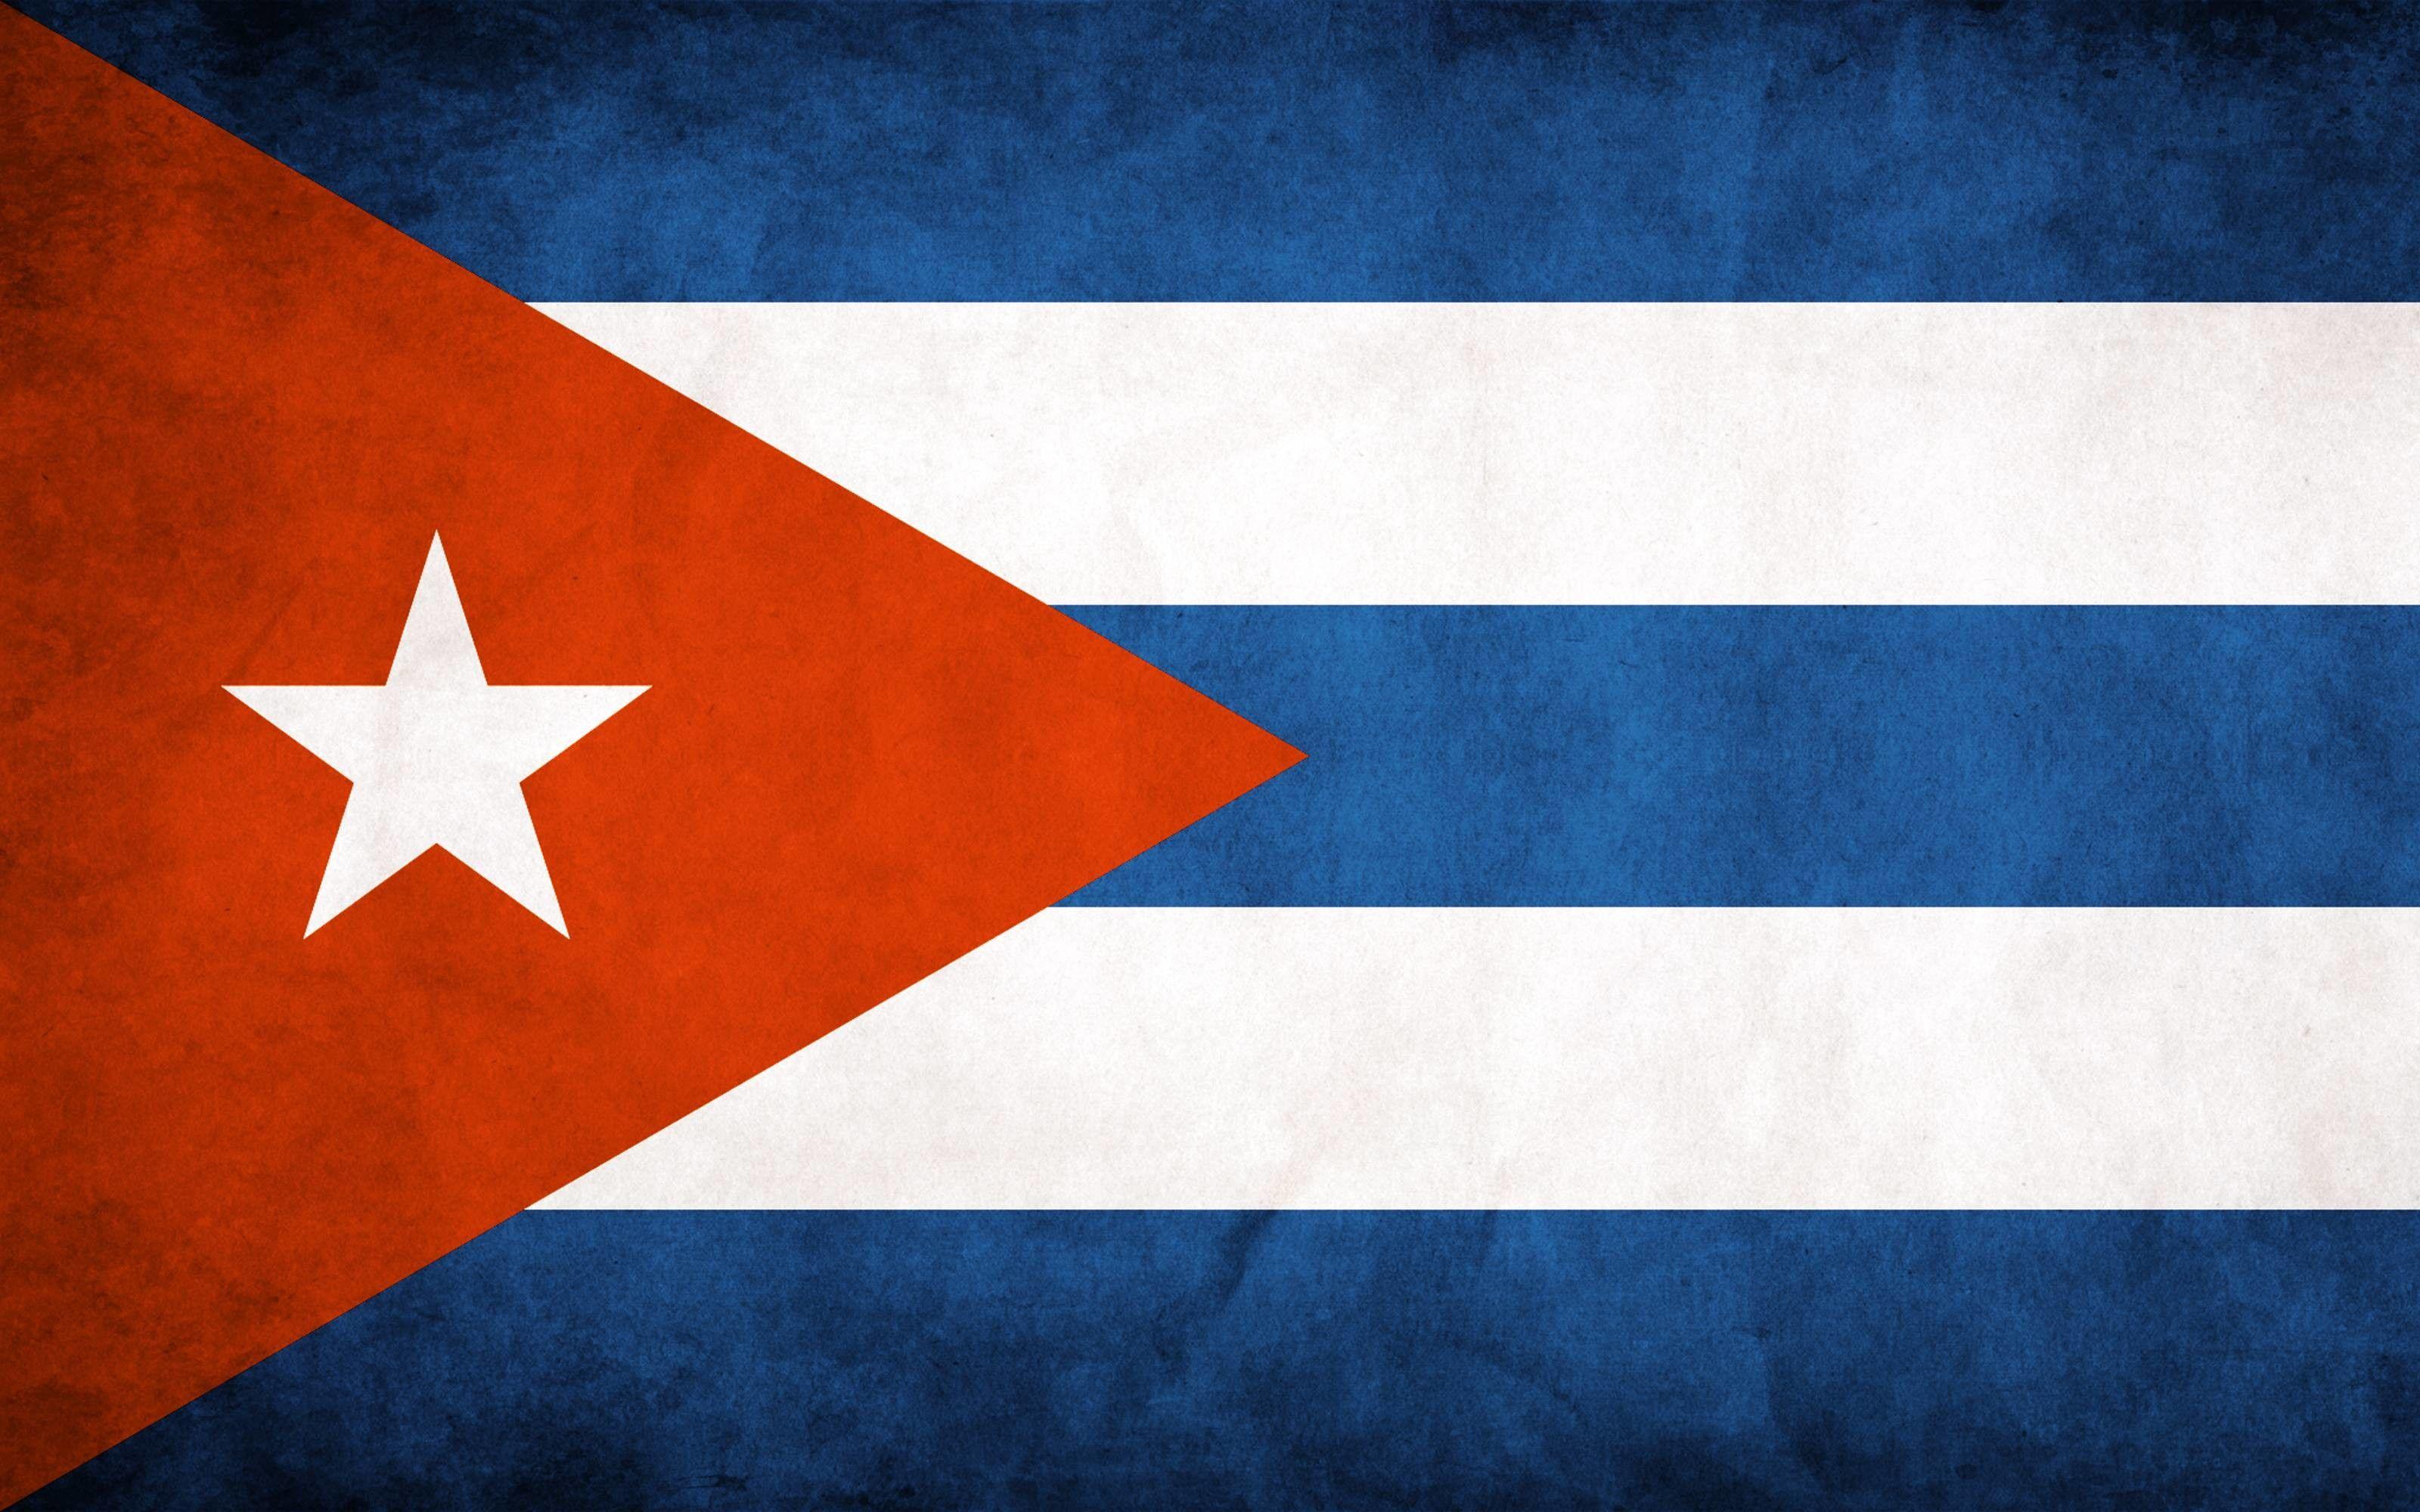 2029 Cuban Flag Wallpaper Images Stock Photos  Vectors  Shutterstock